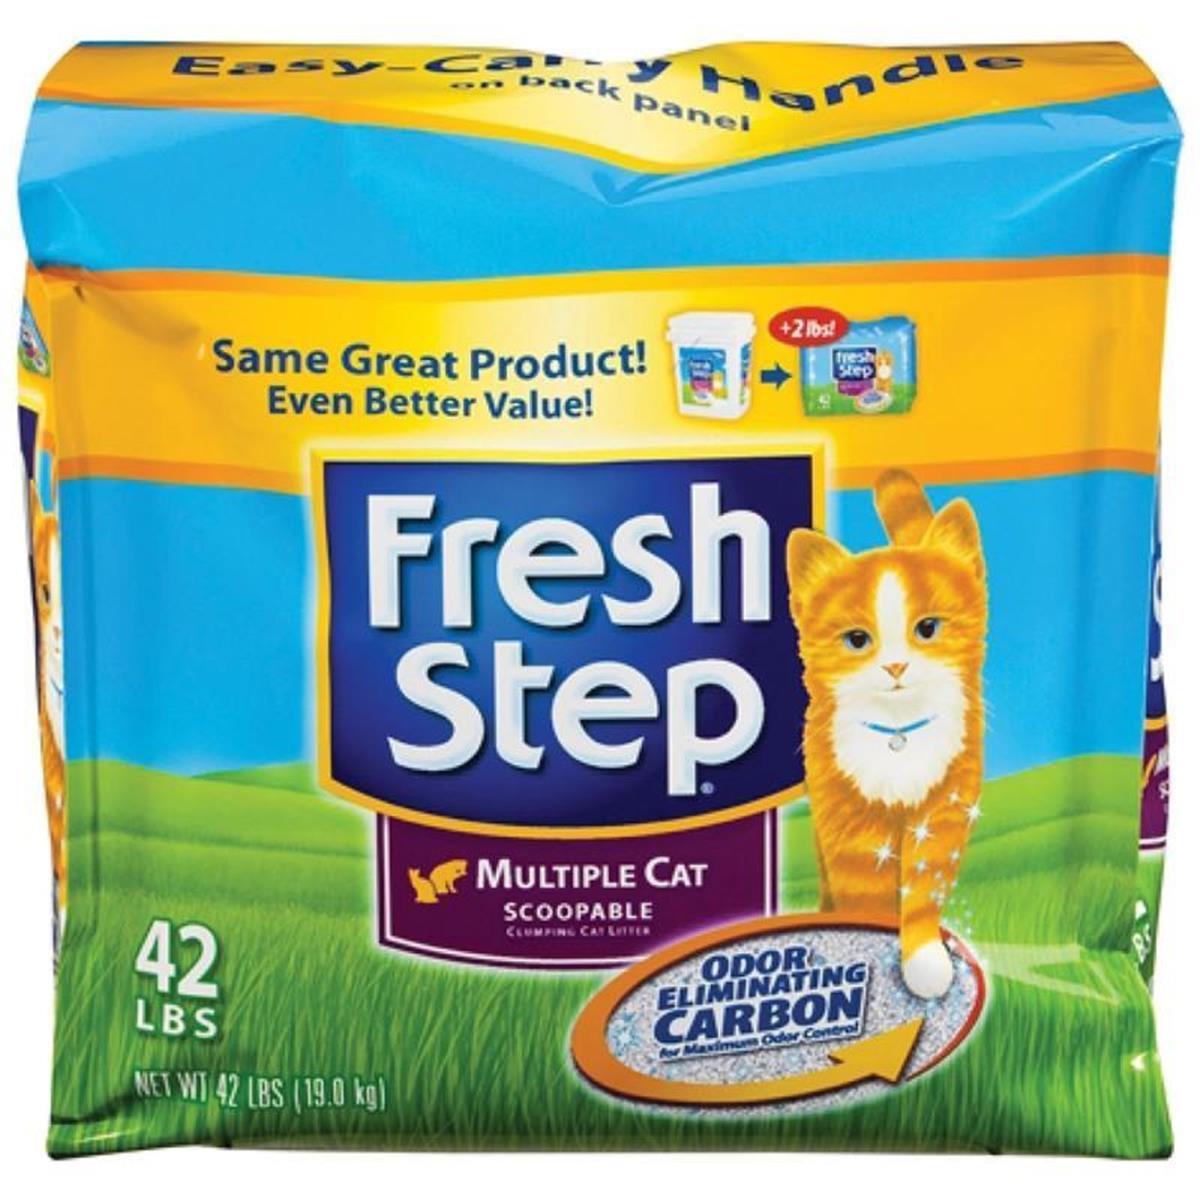 Clorox Petcare Products 32049-30504 42 Lbs Febreze Fresh Step Multi - Cat Clumping Litter - Scented